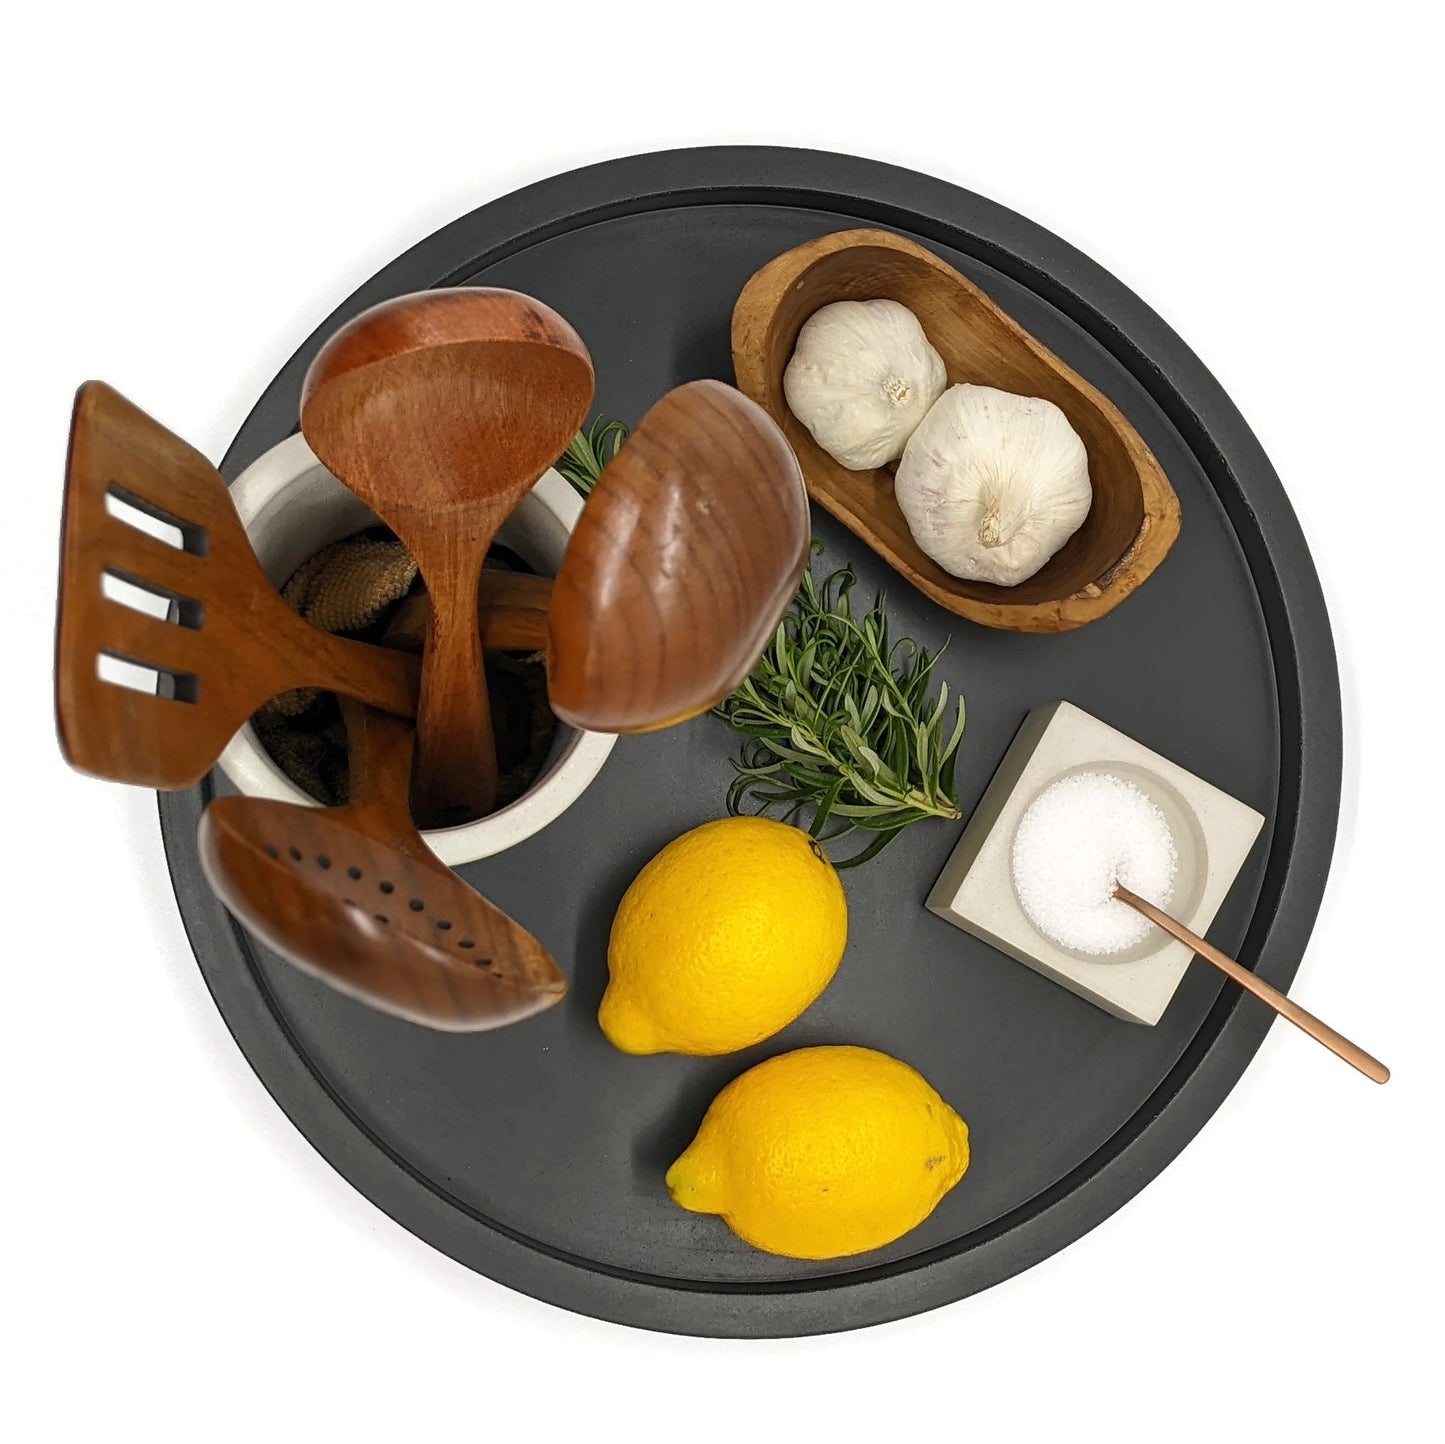 Black 15 inch concrete tray with salt pinch bowl, lemon, garlic, and utensil holder